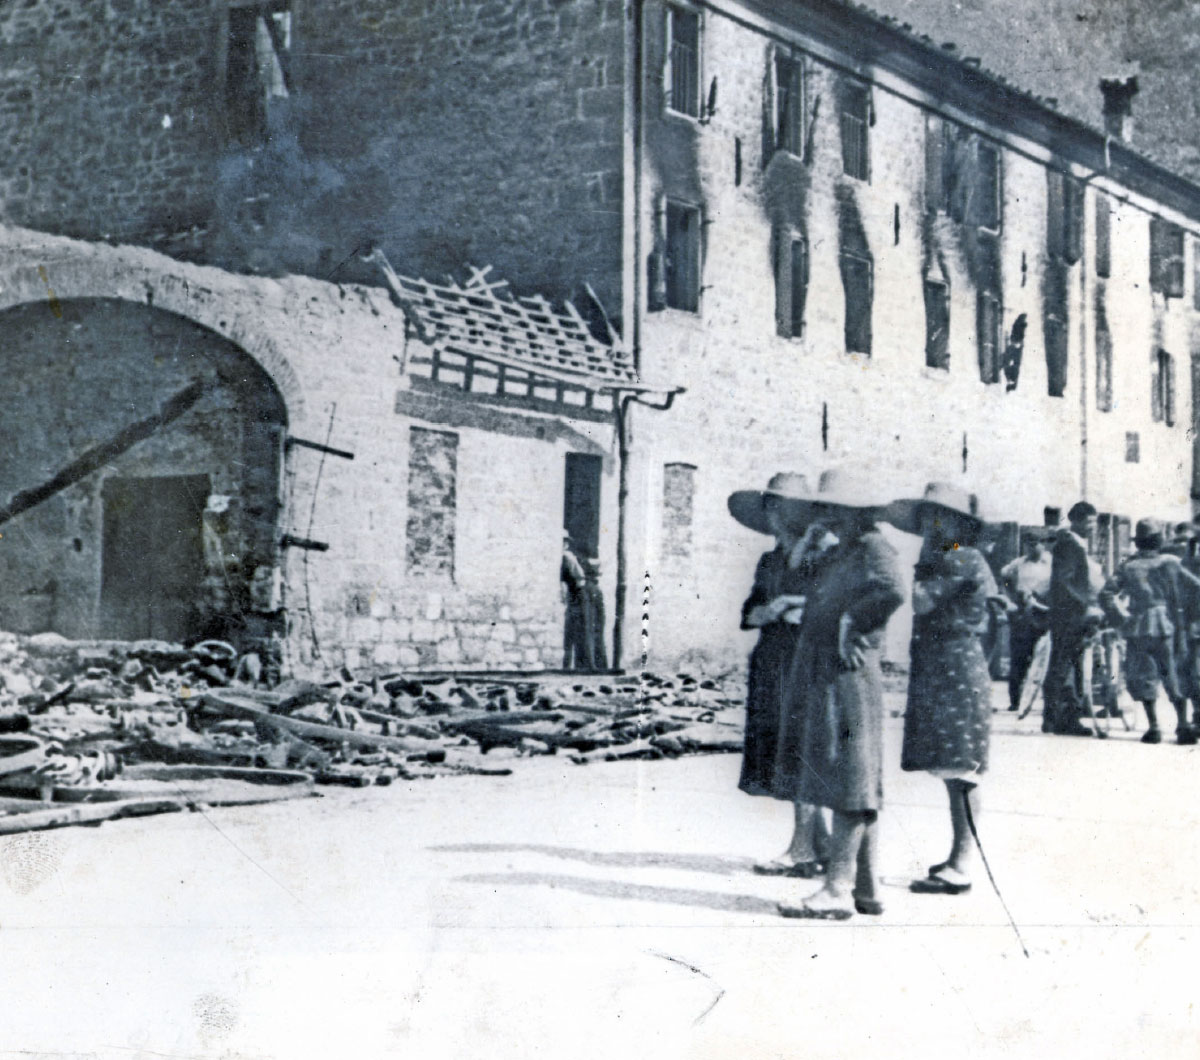 Bettola am Morgen nach dem Brand, 24. Juni 1944